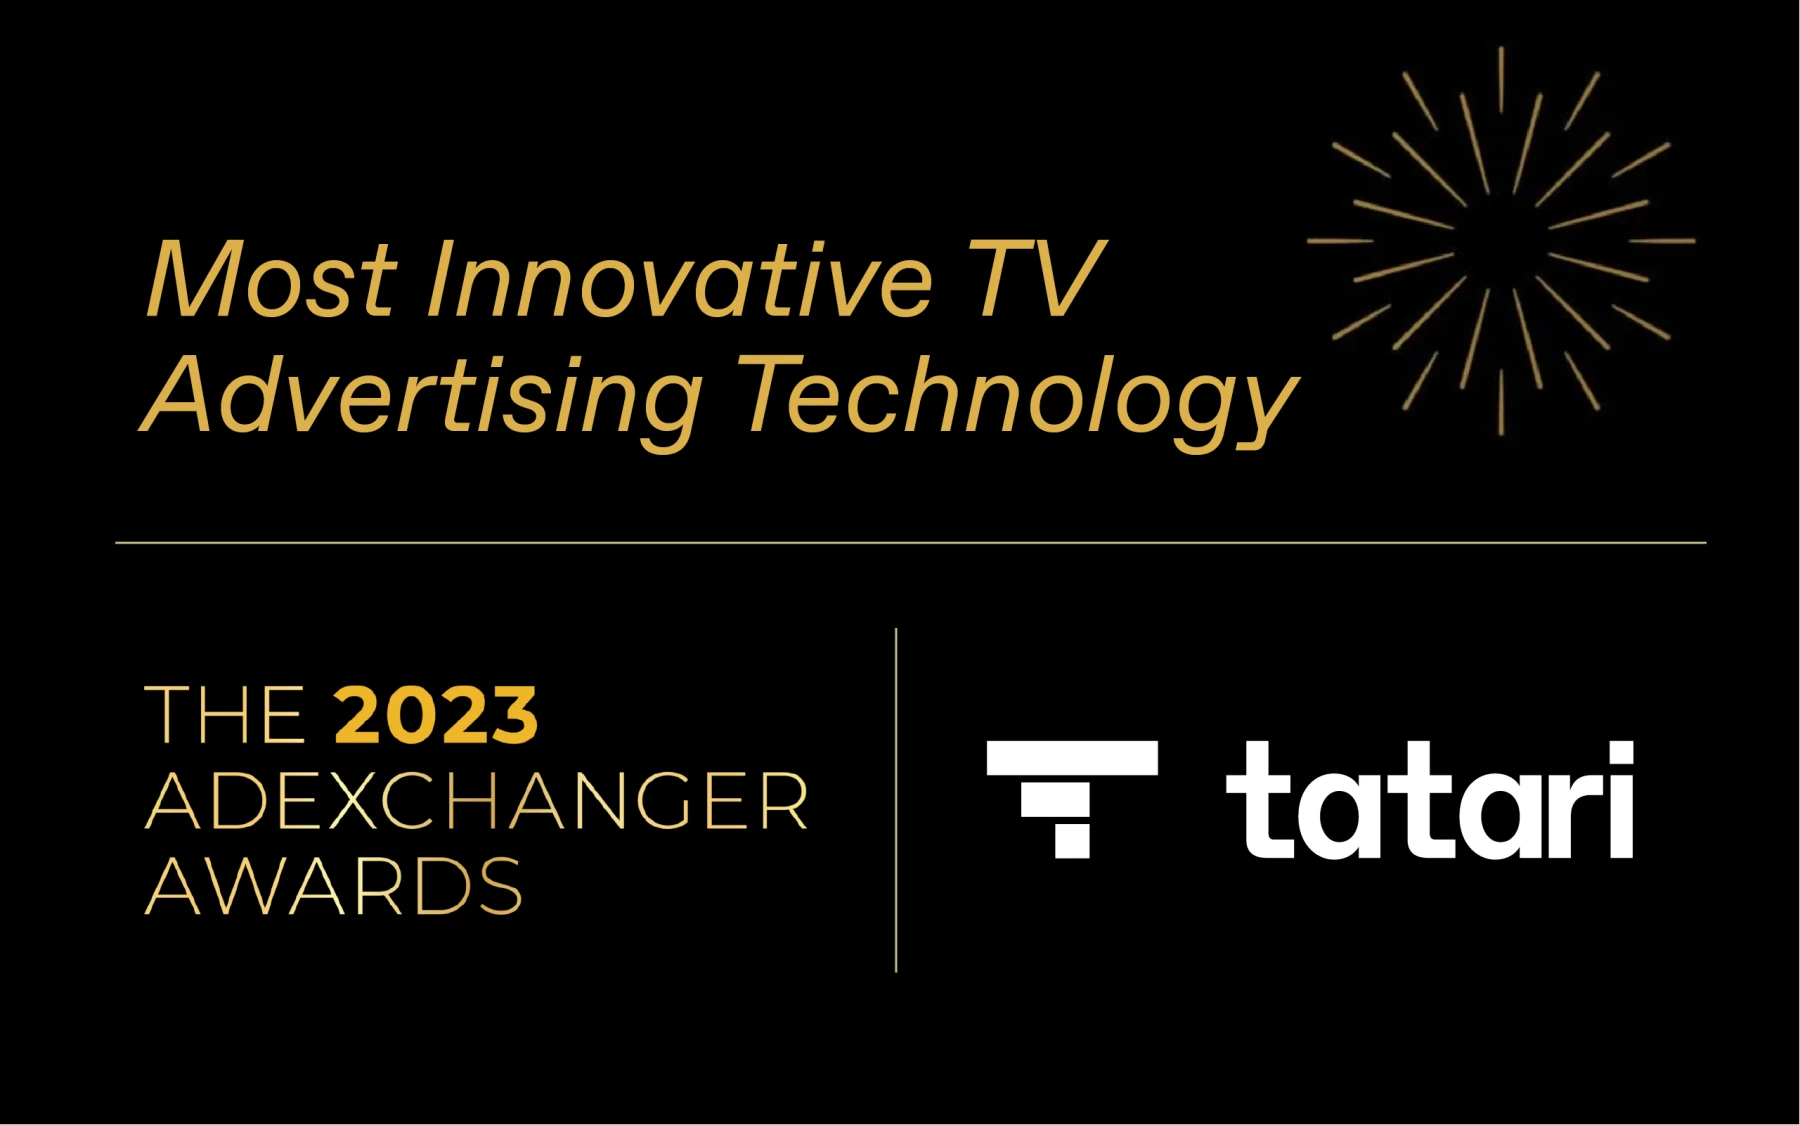 Tatari Wins AdExchanger’s 2023 Most Innovative TV Advertising Technology Award